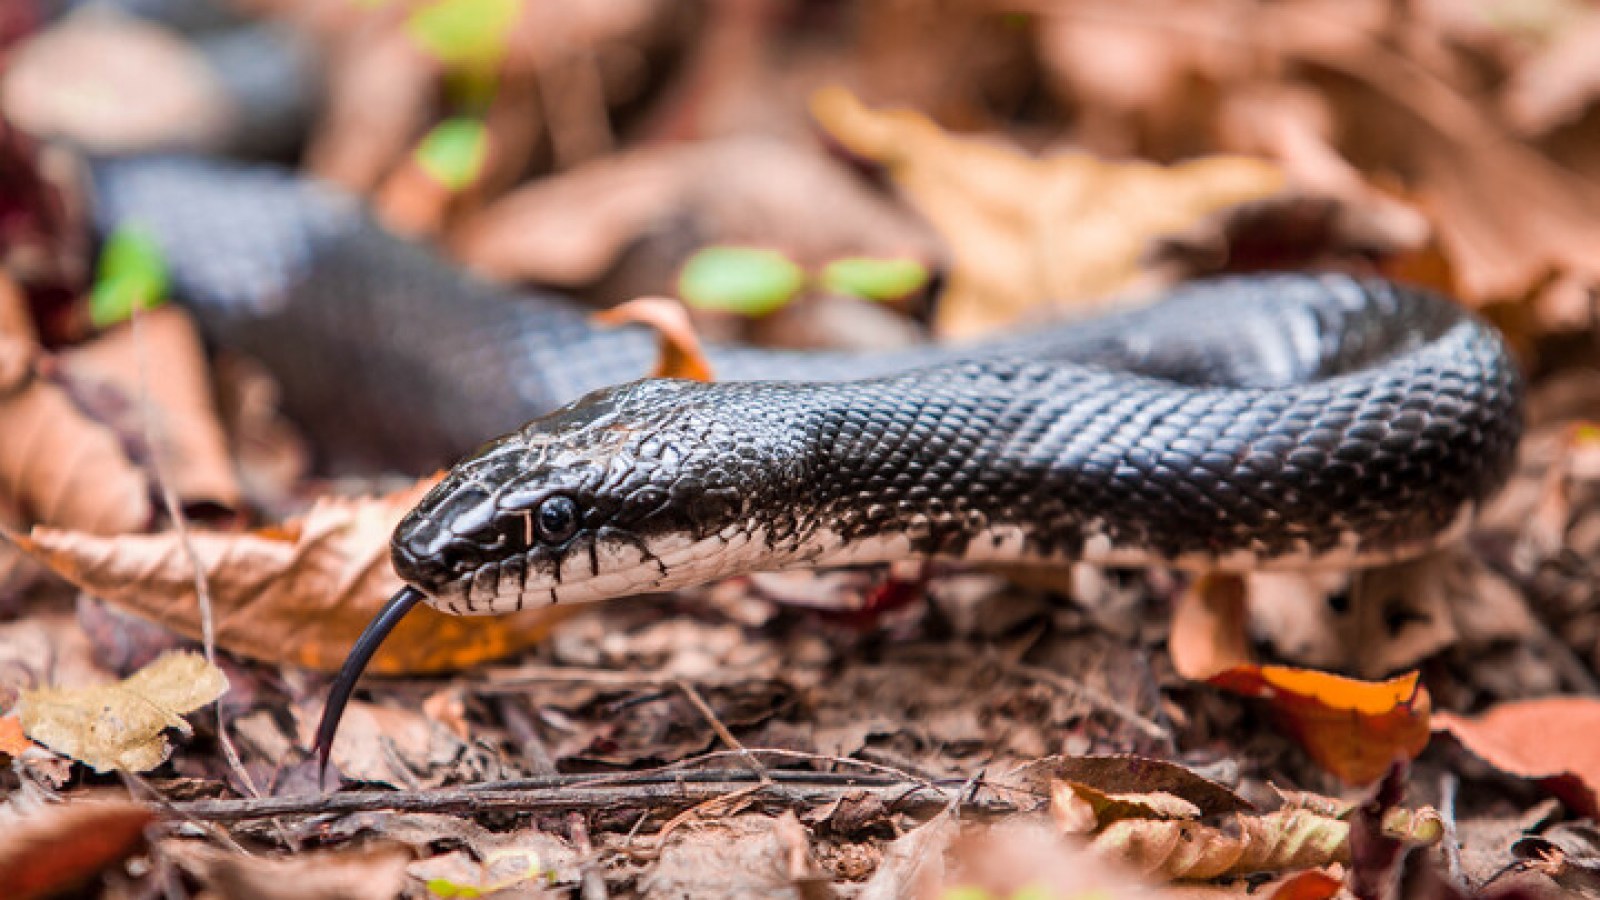 Massive Snake Hanging from Tree in Pennsylvania Park Sparks Public Alert